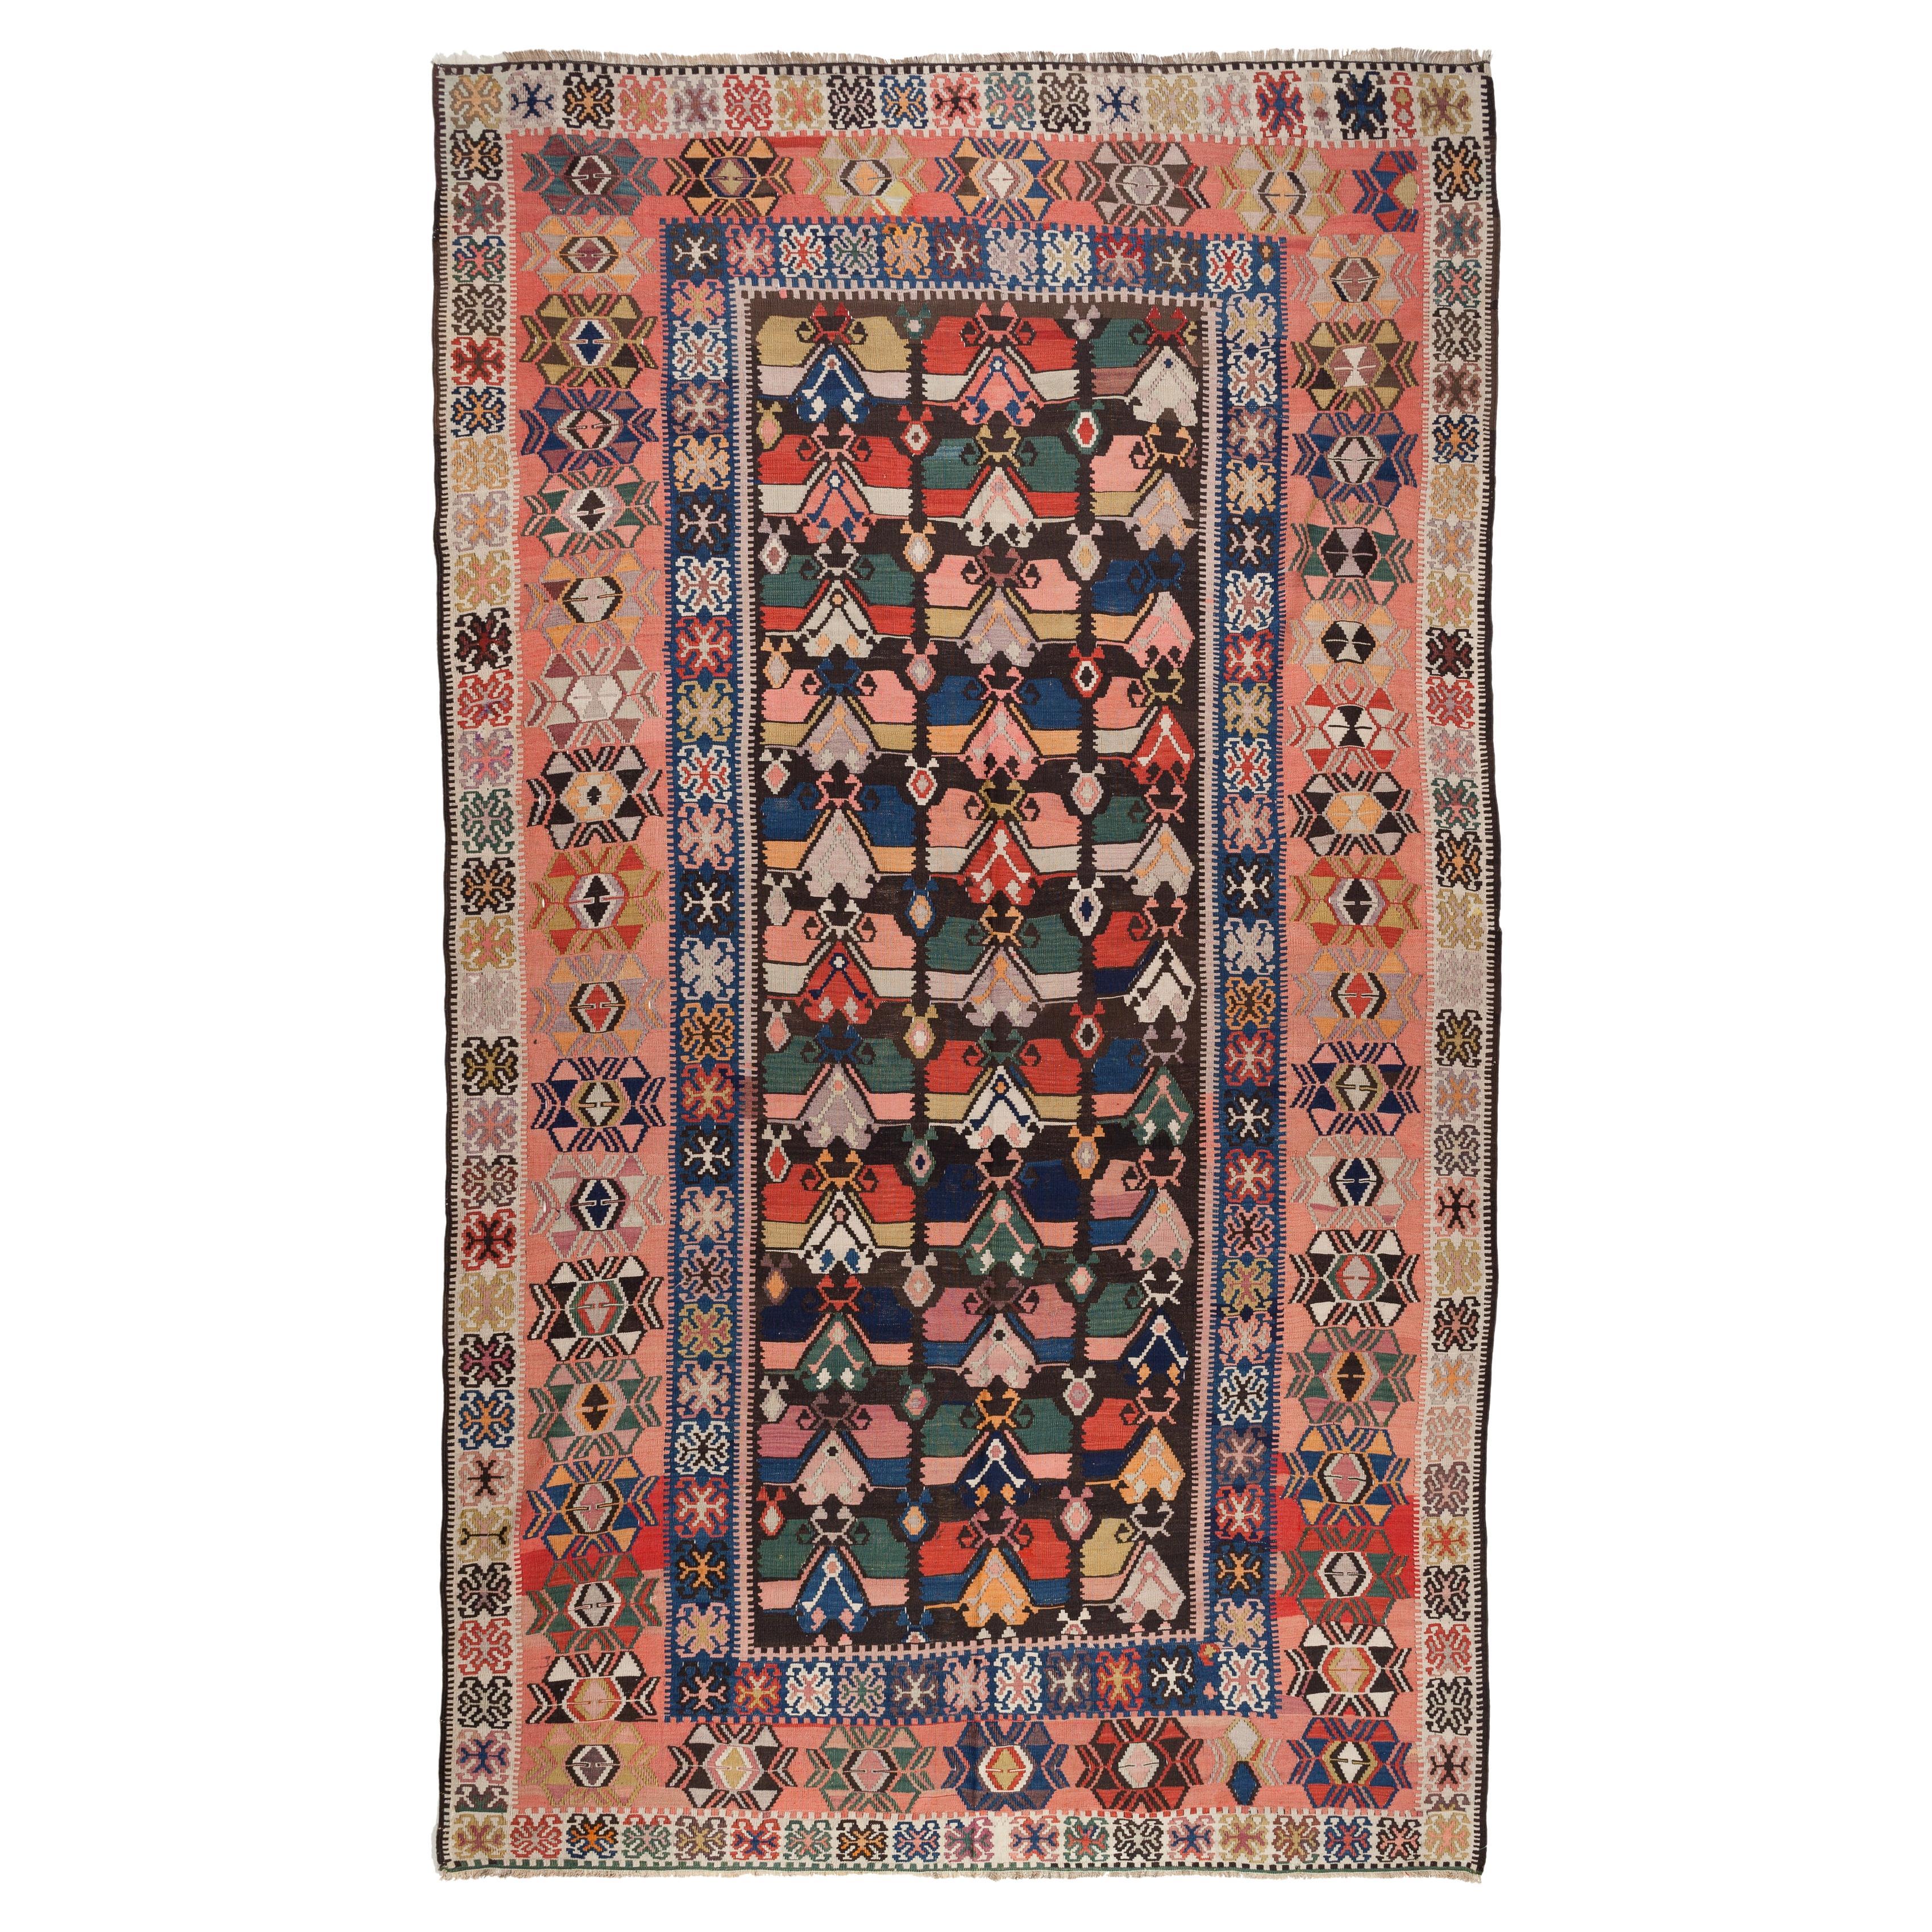 Antique Bayburt Kilim East Anatolia Rug Turkish Carpet